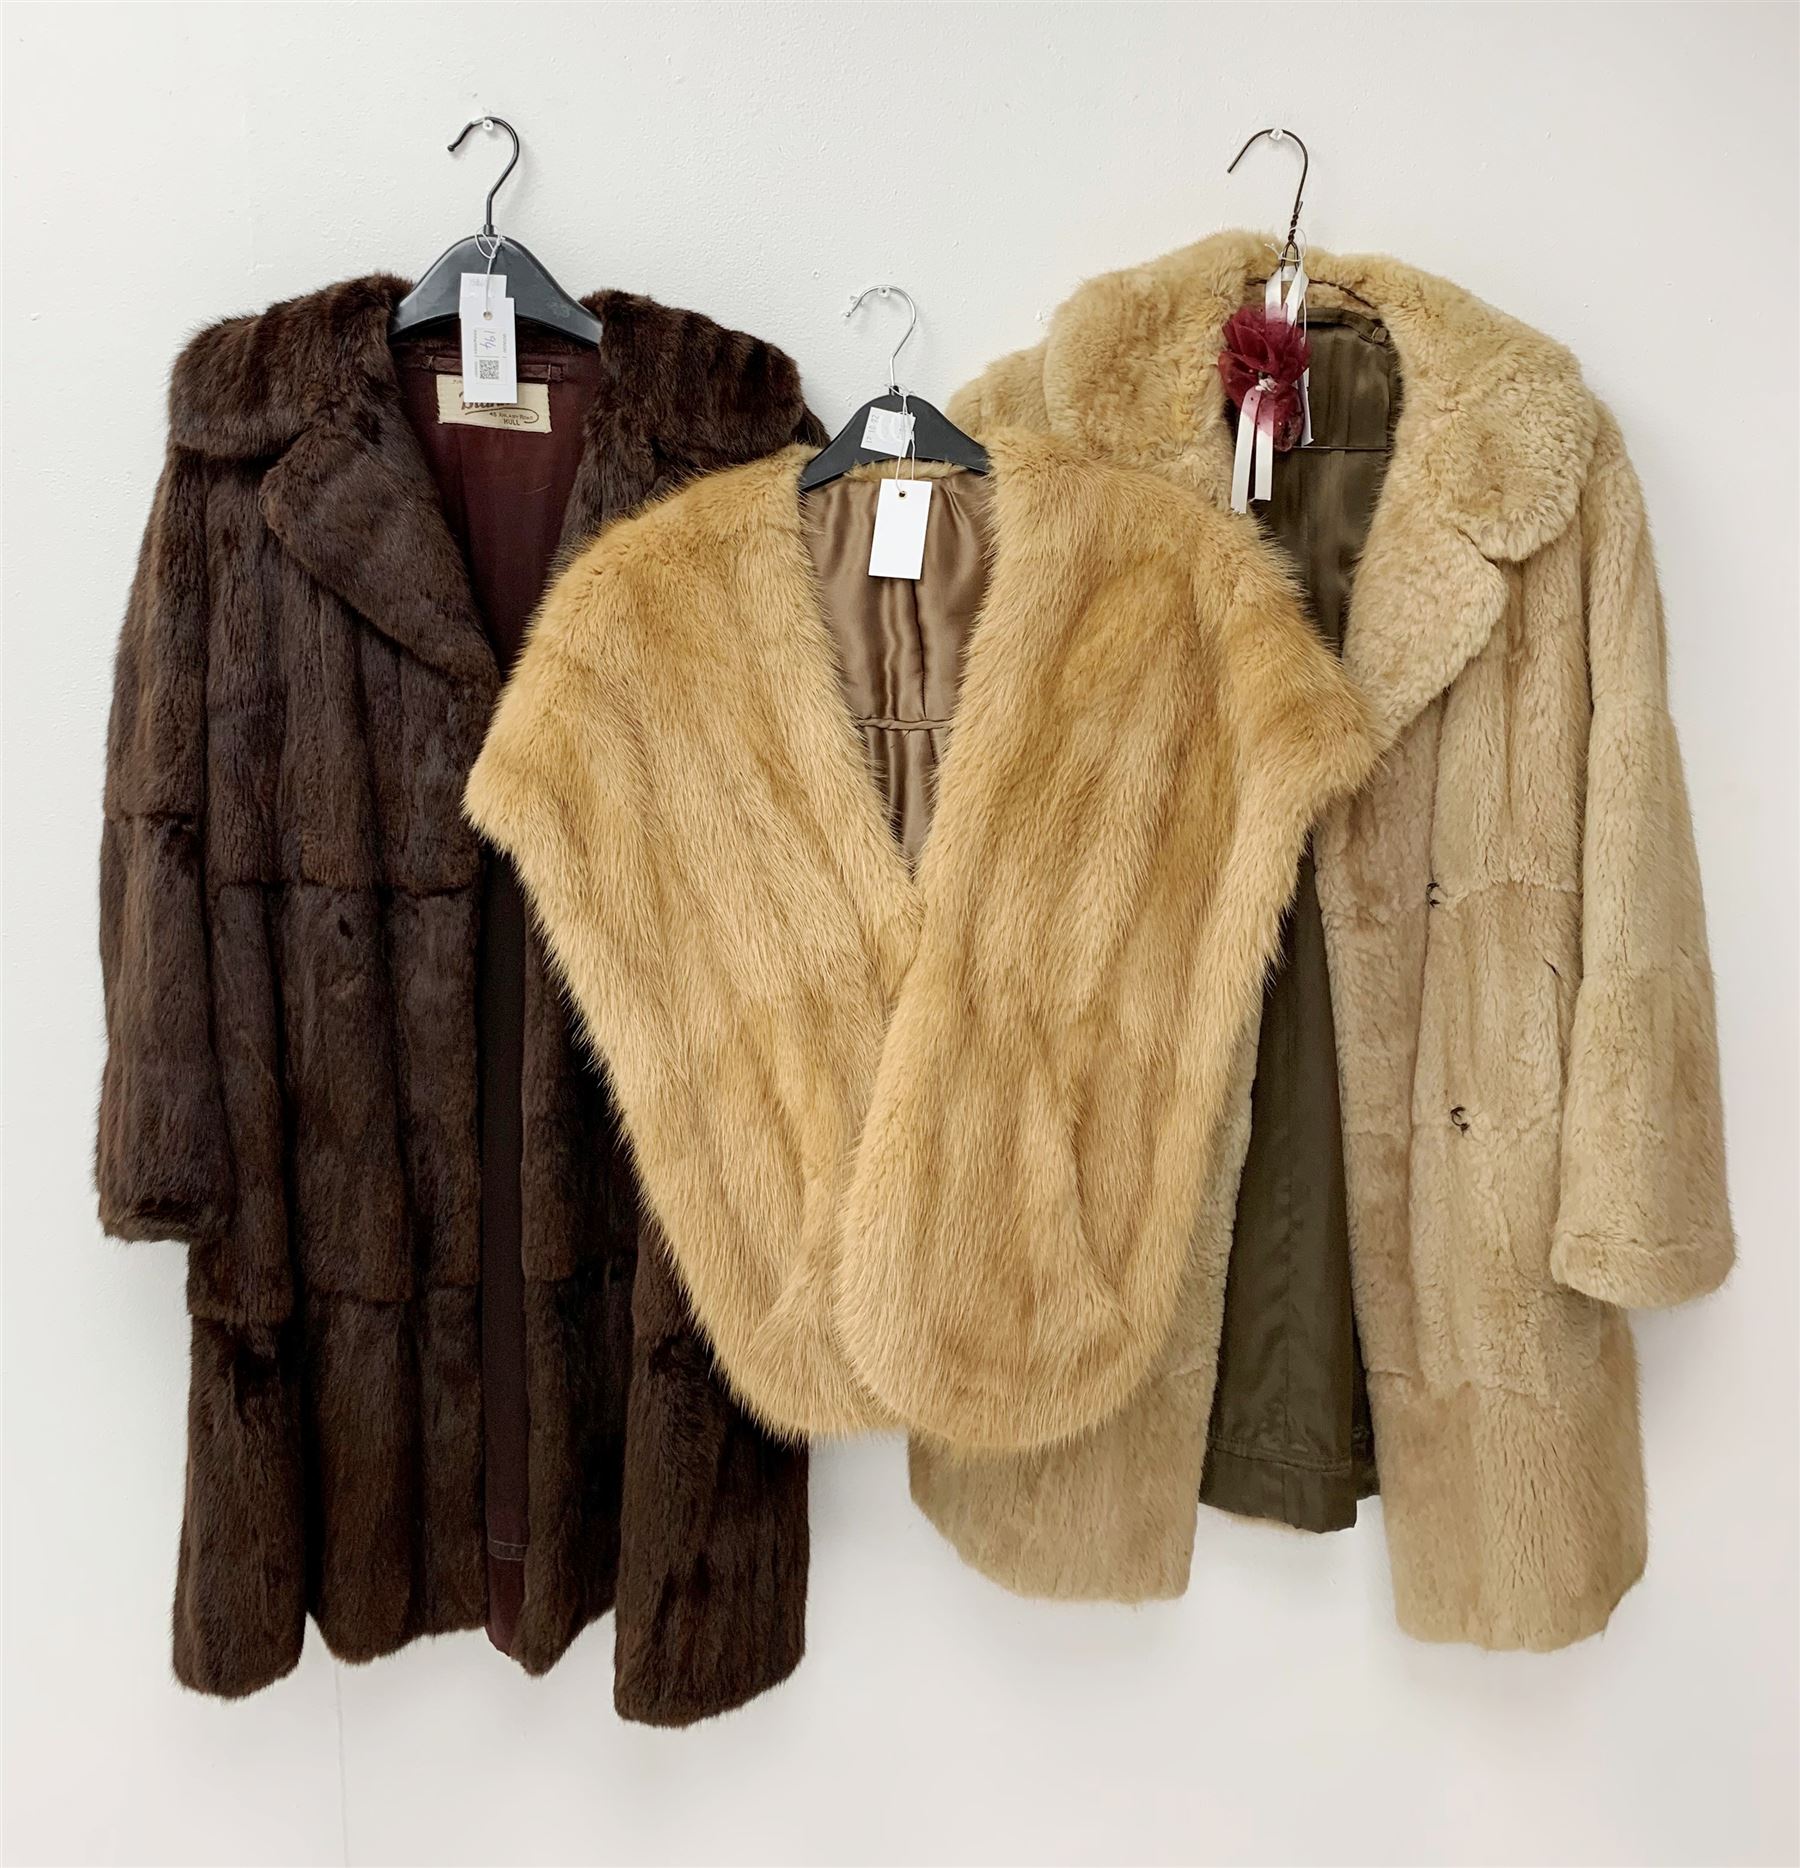 jantiques vintage fur coat | capacitasalud.com